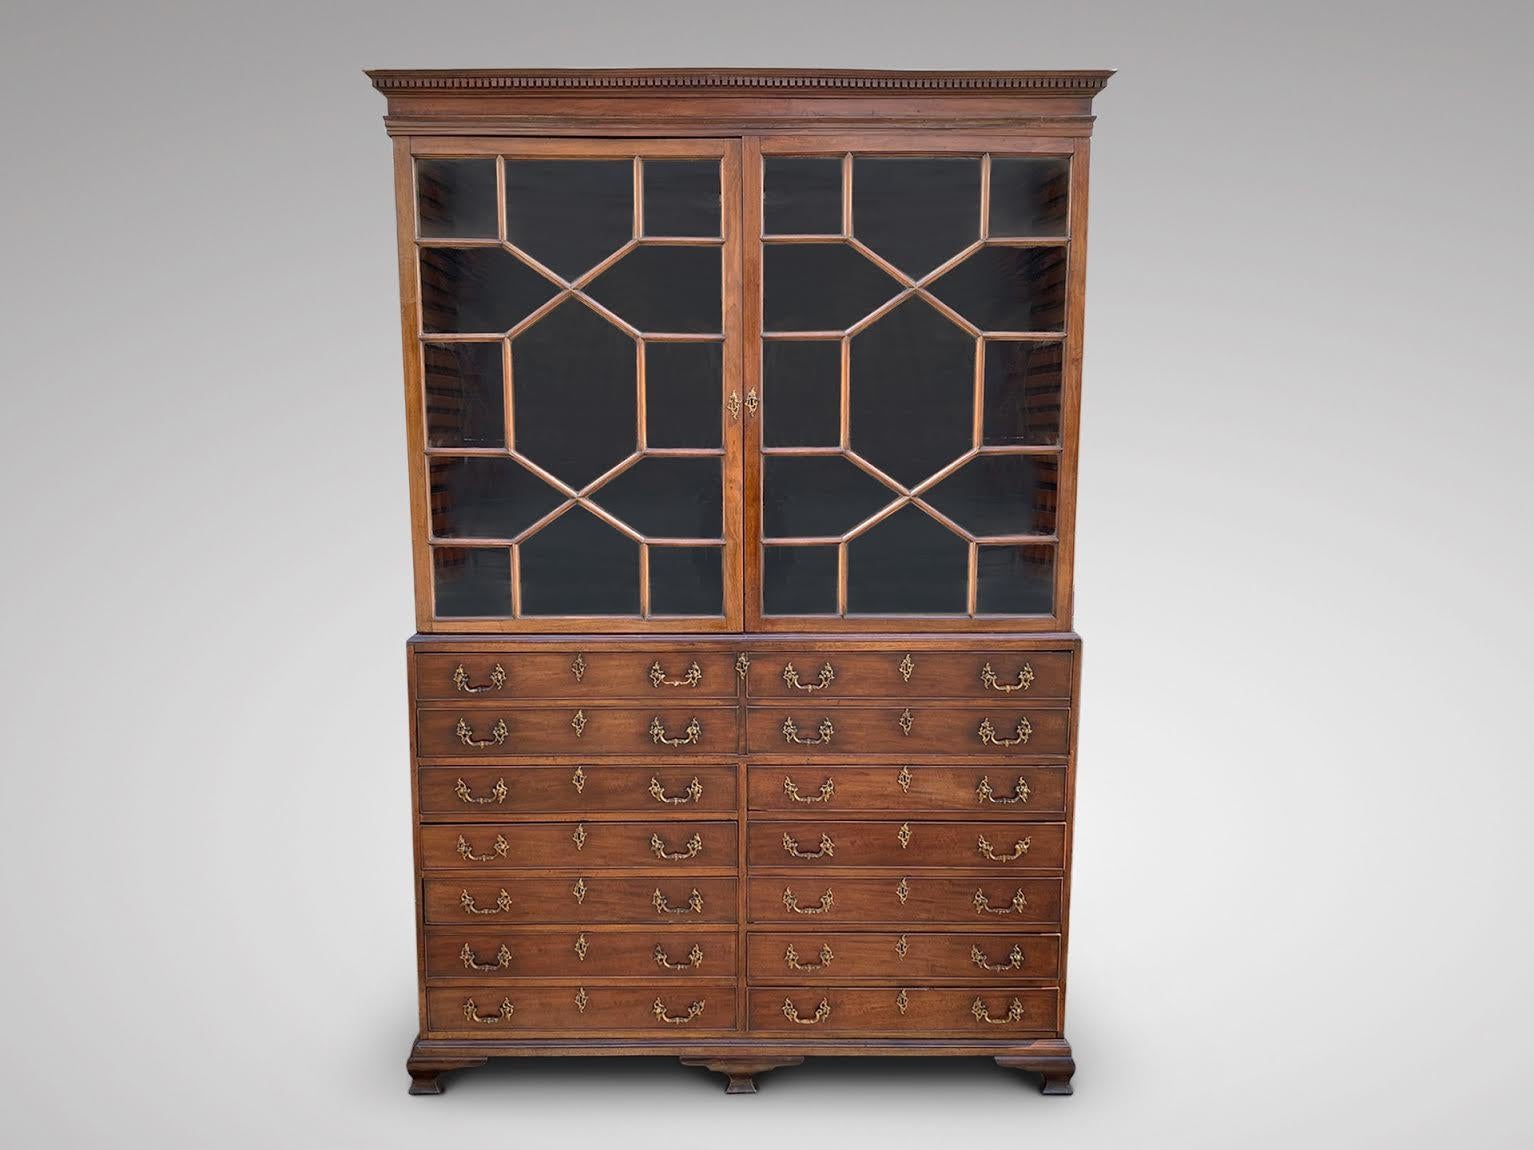 Hand-Crafted 18th Century Stunning Mahogany Secretaire Bookcase